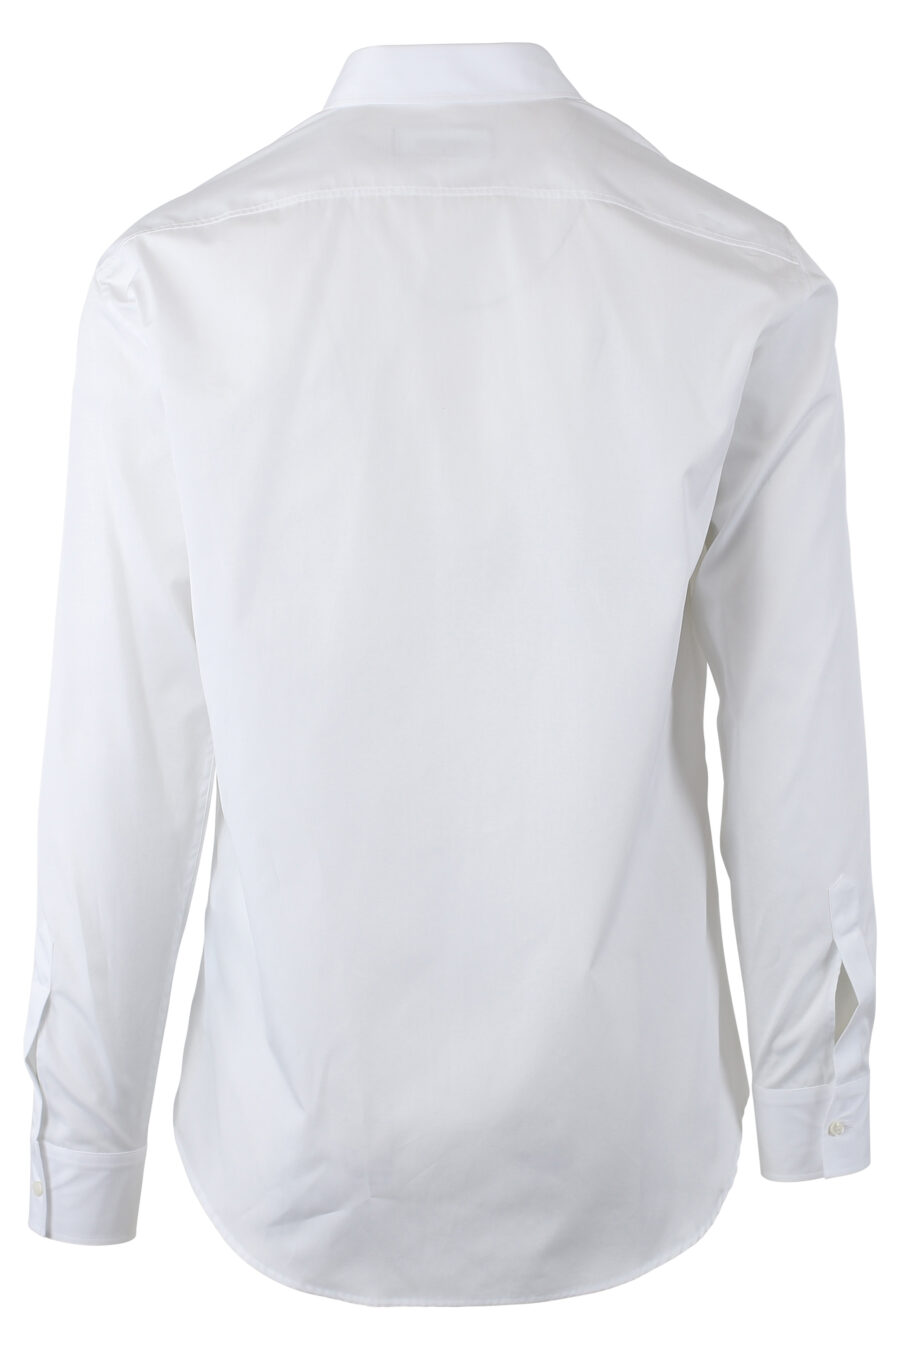 Camisa blanca con minilogo cremallera - IMG 1111